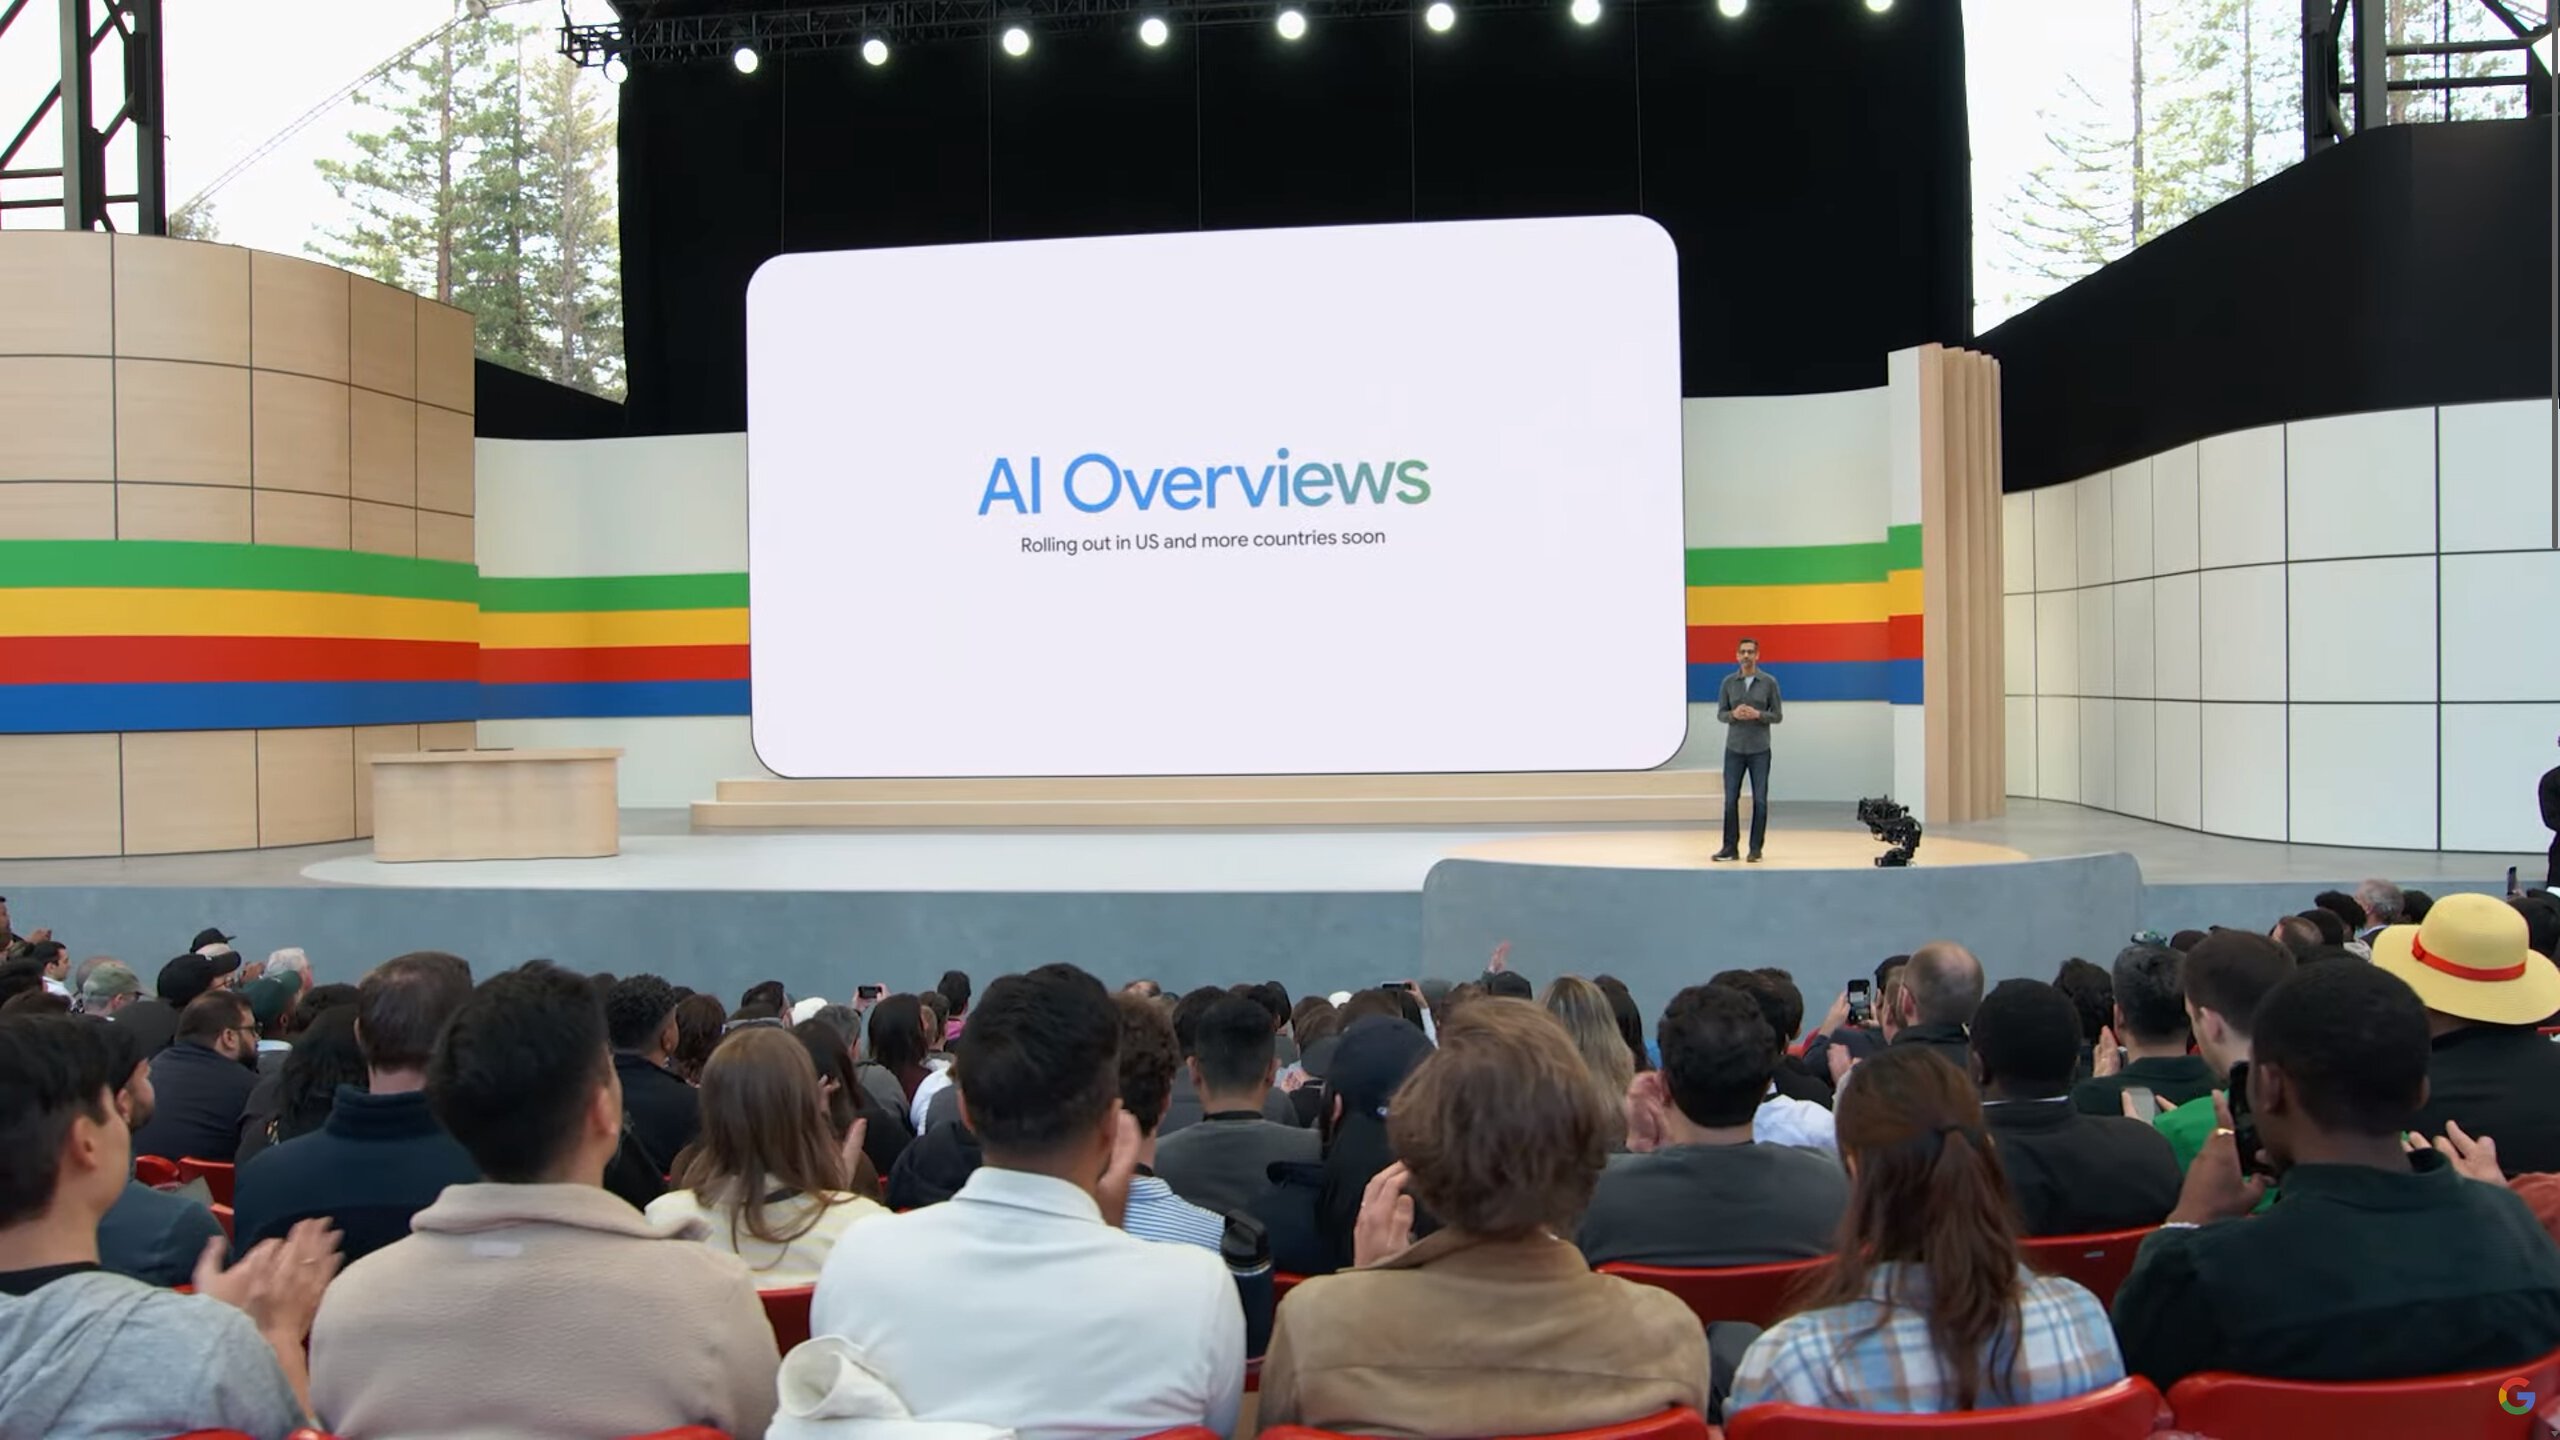 AI Overviews fiasco: Google responds to backlash, promises improvements